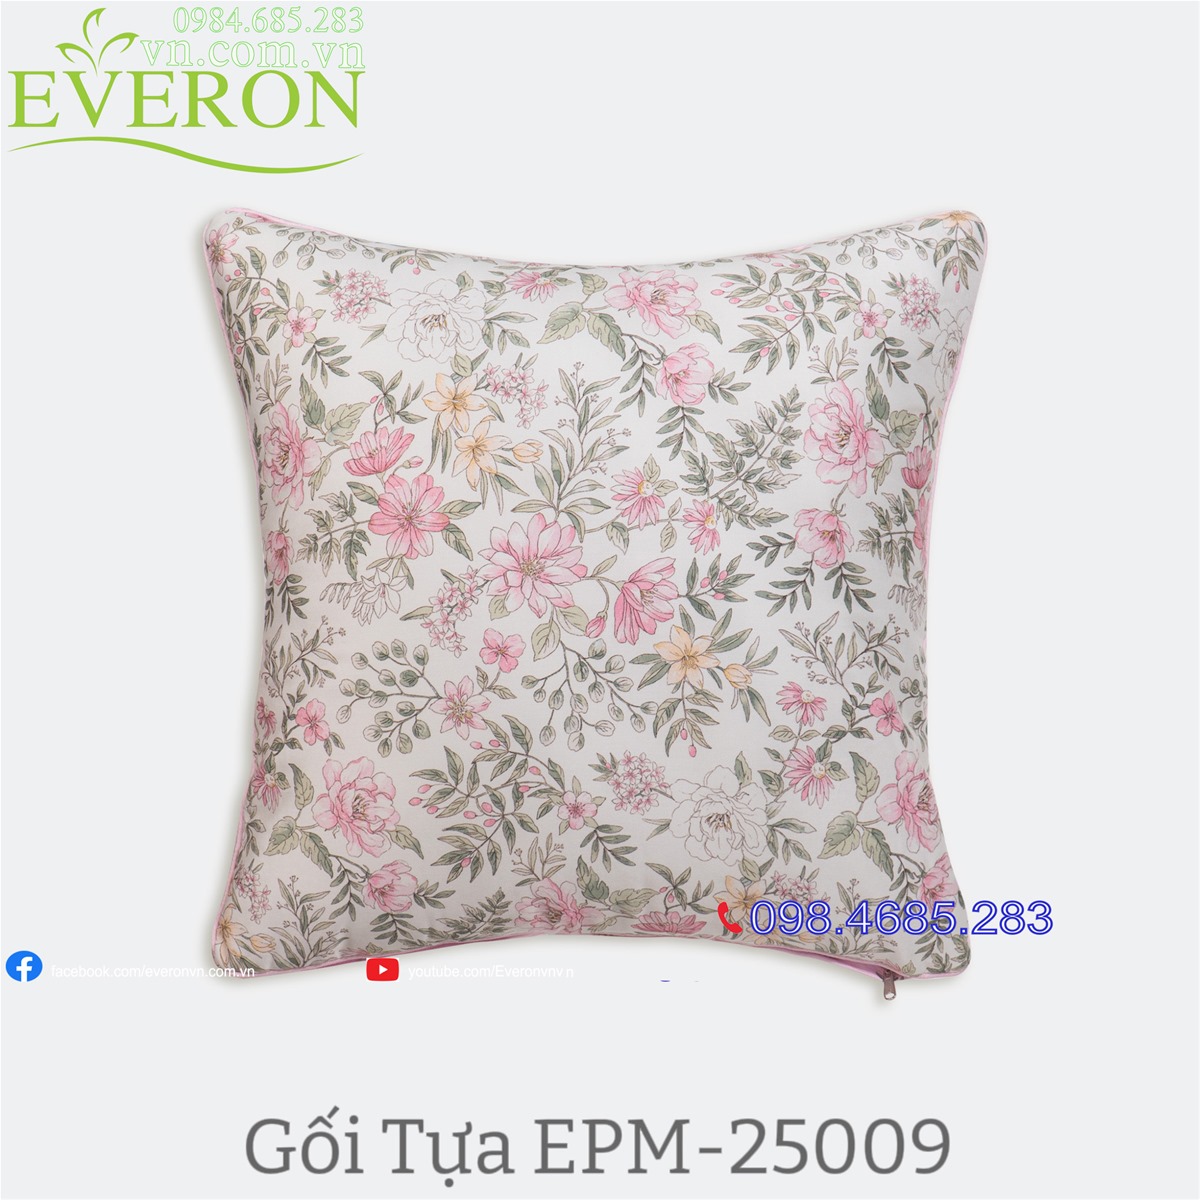  gối tựa Everon EPM-25009